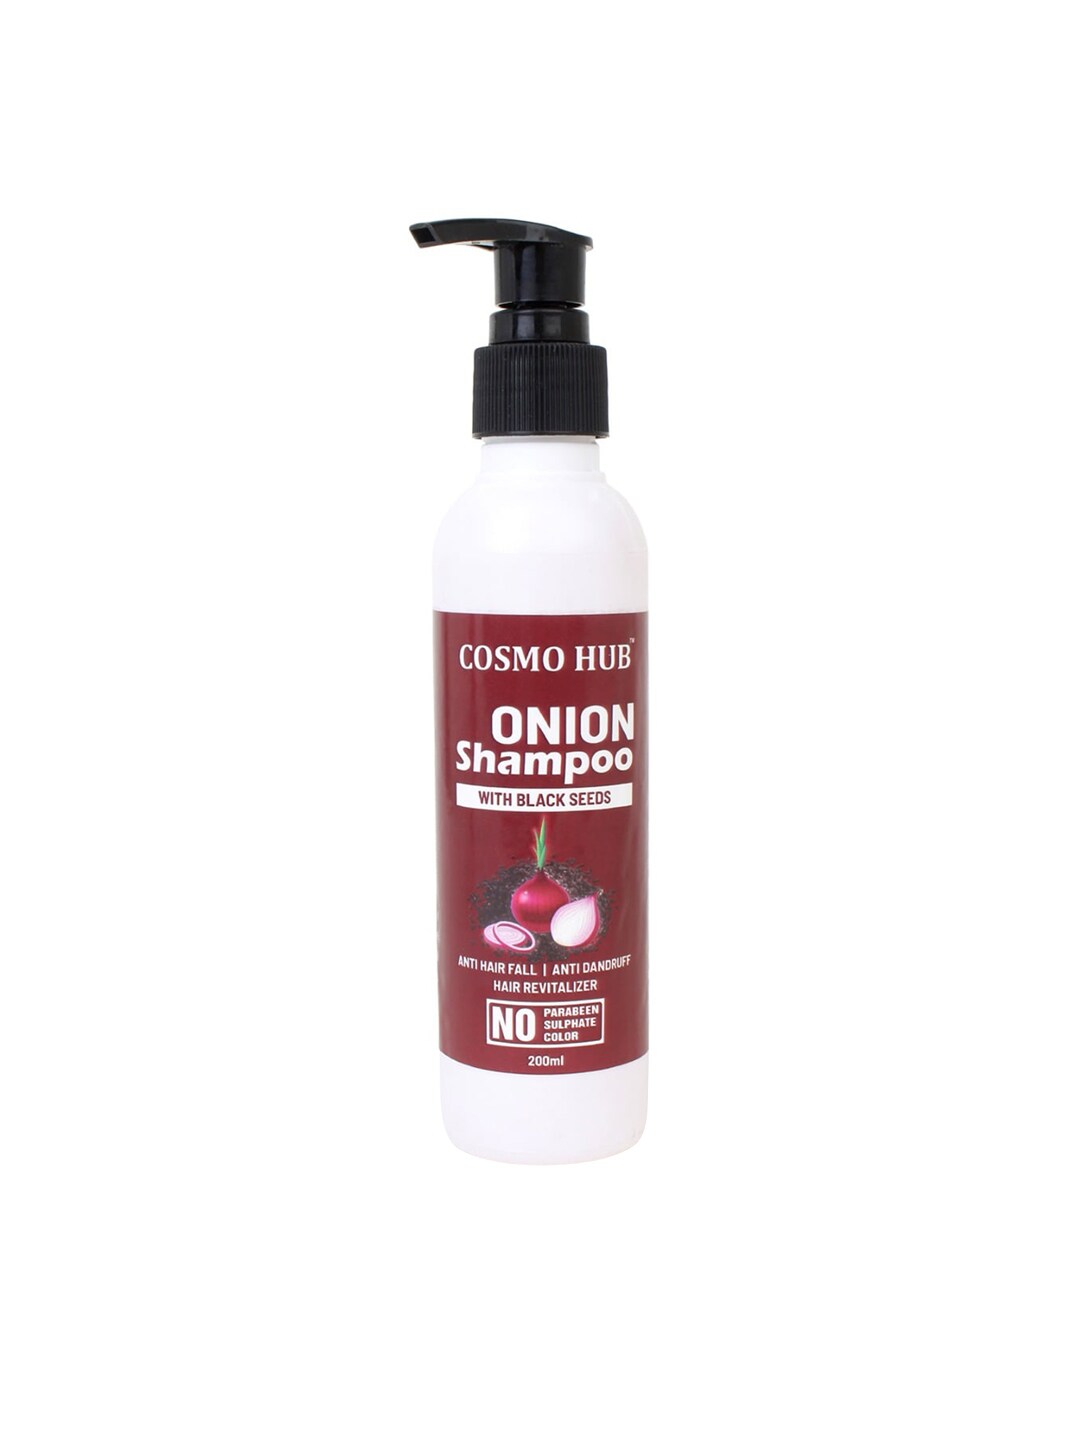 COSMO HUB Onion Shampoo with Black Seed - 200 ml Price in India